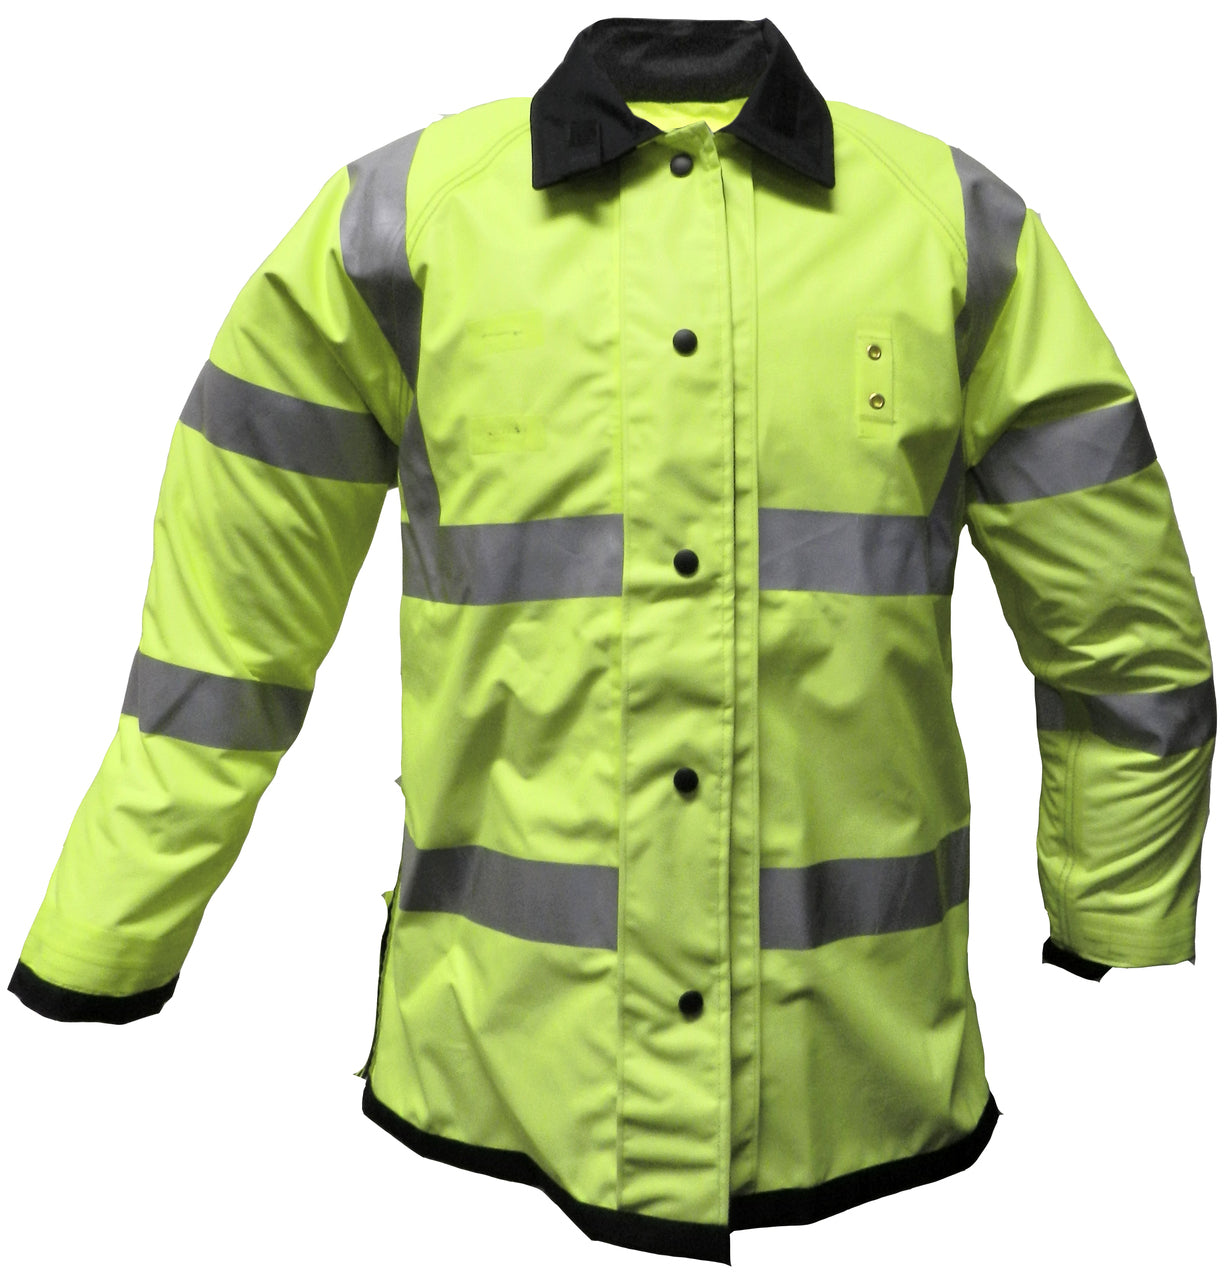 Solar 1 Clothing High Visibility Reversible Police Rain Jacket RRS2